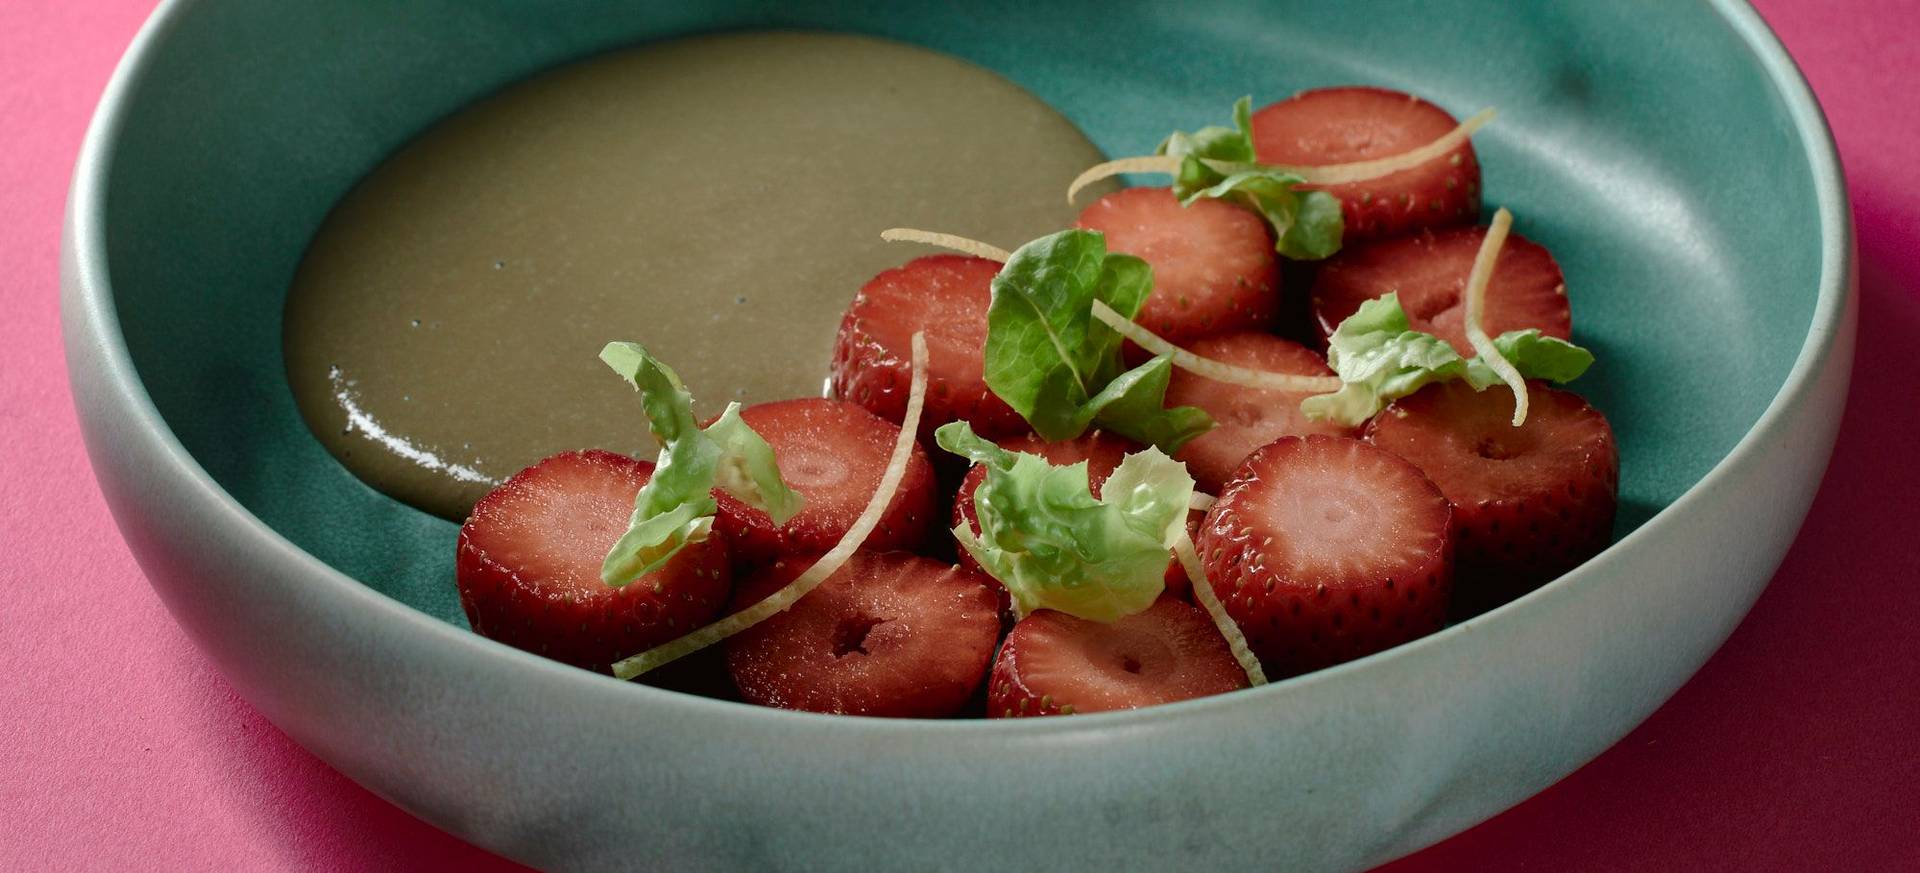 Vegan Strawberry Dessert with Lettuce & Sunflower Seeds